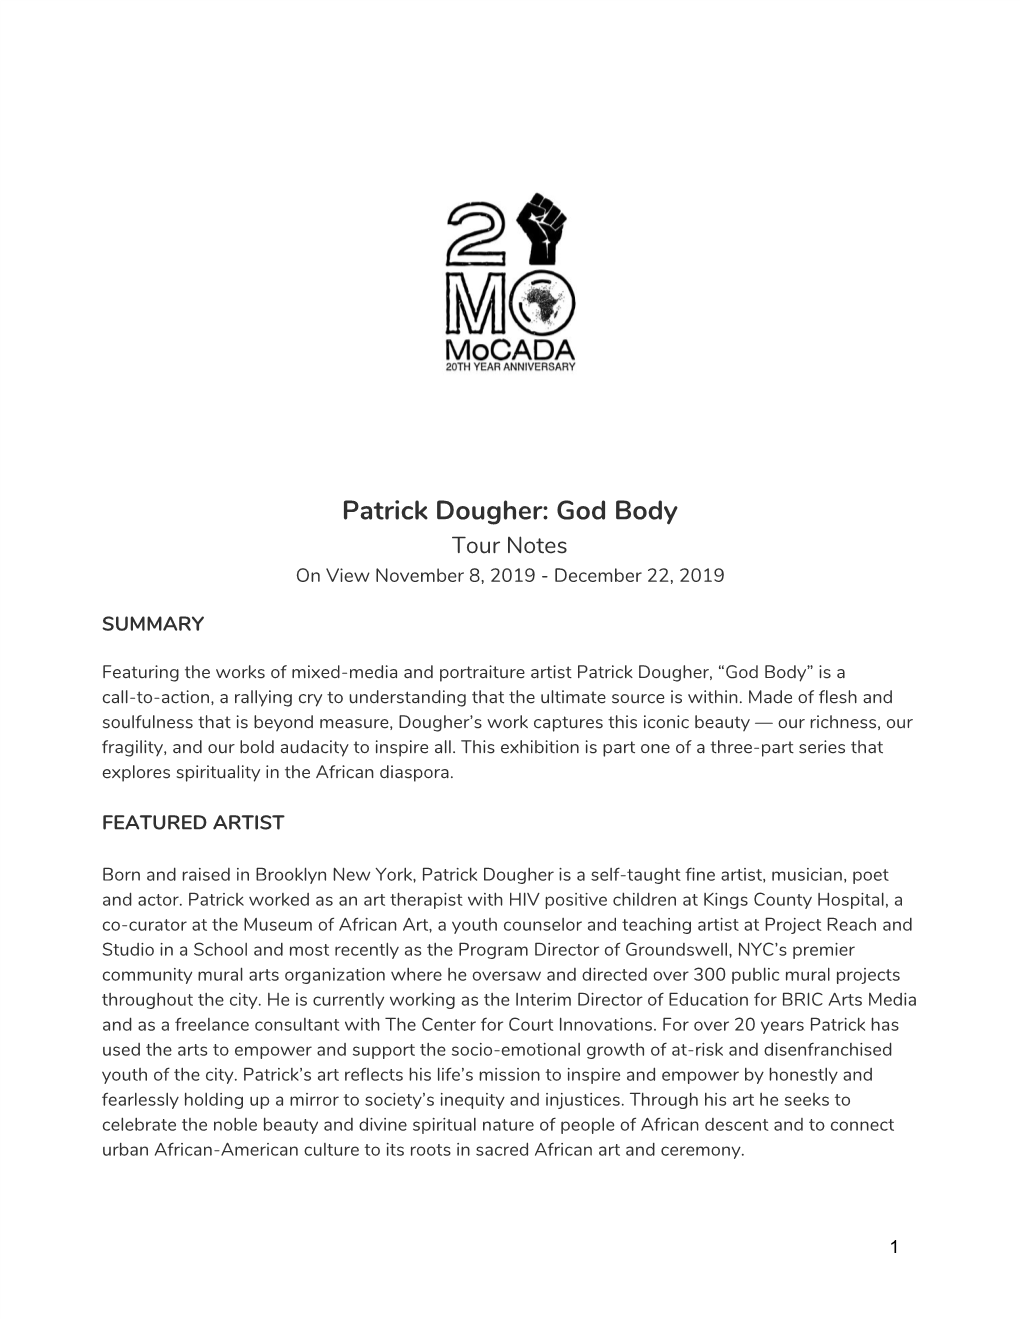 Patrick Dougher: God Body Tour Notes on View November 8, 2019 - December 22, 2019